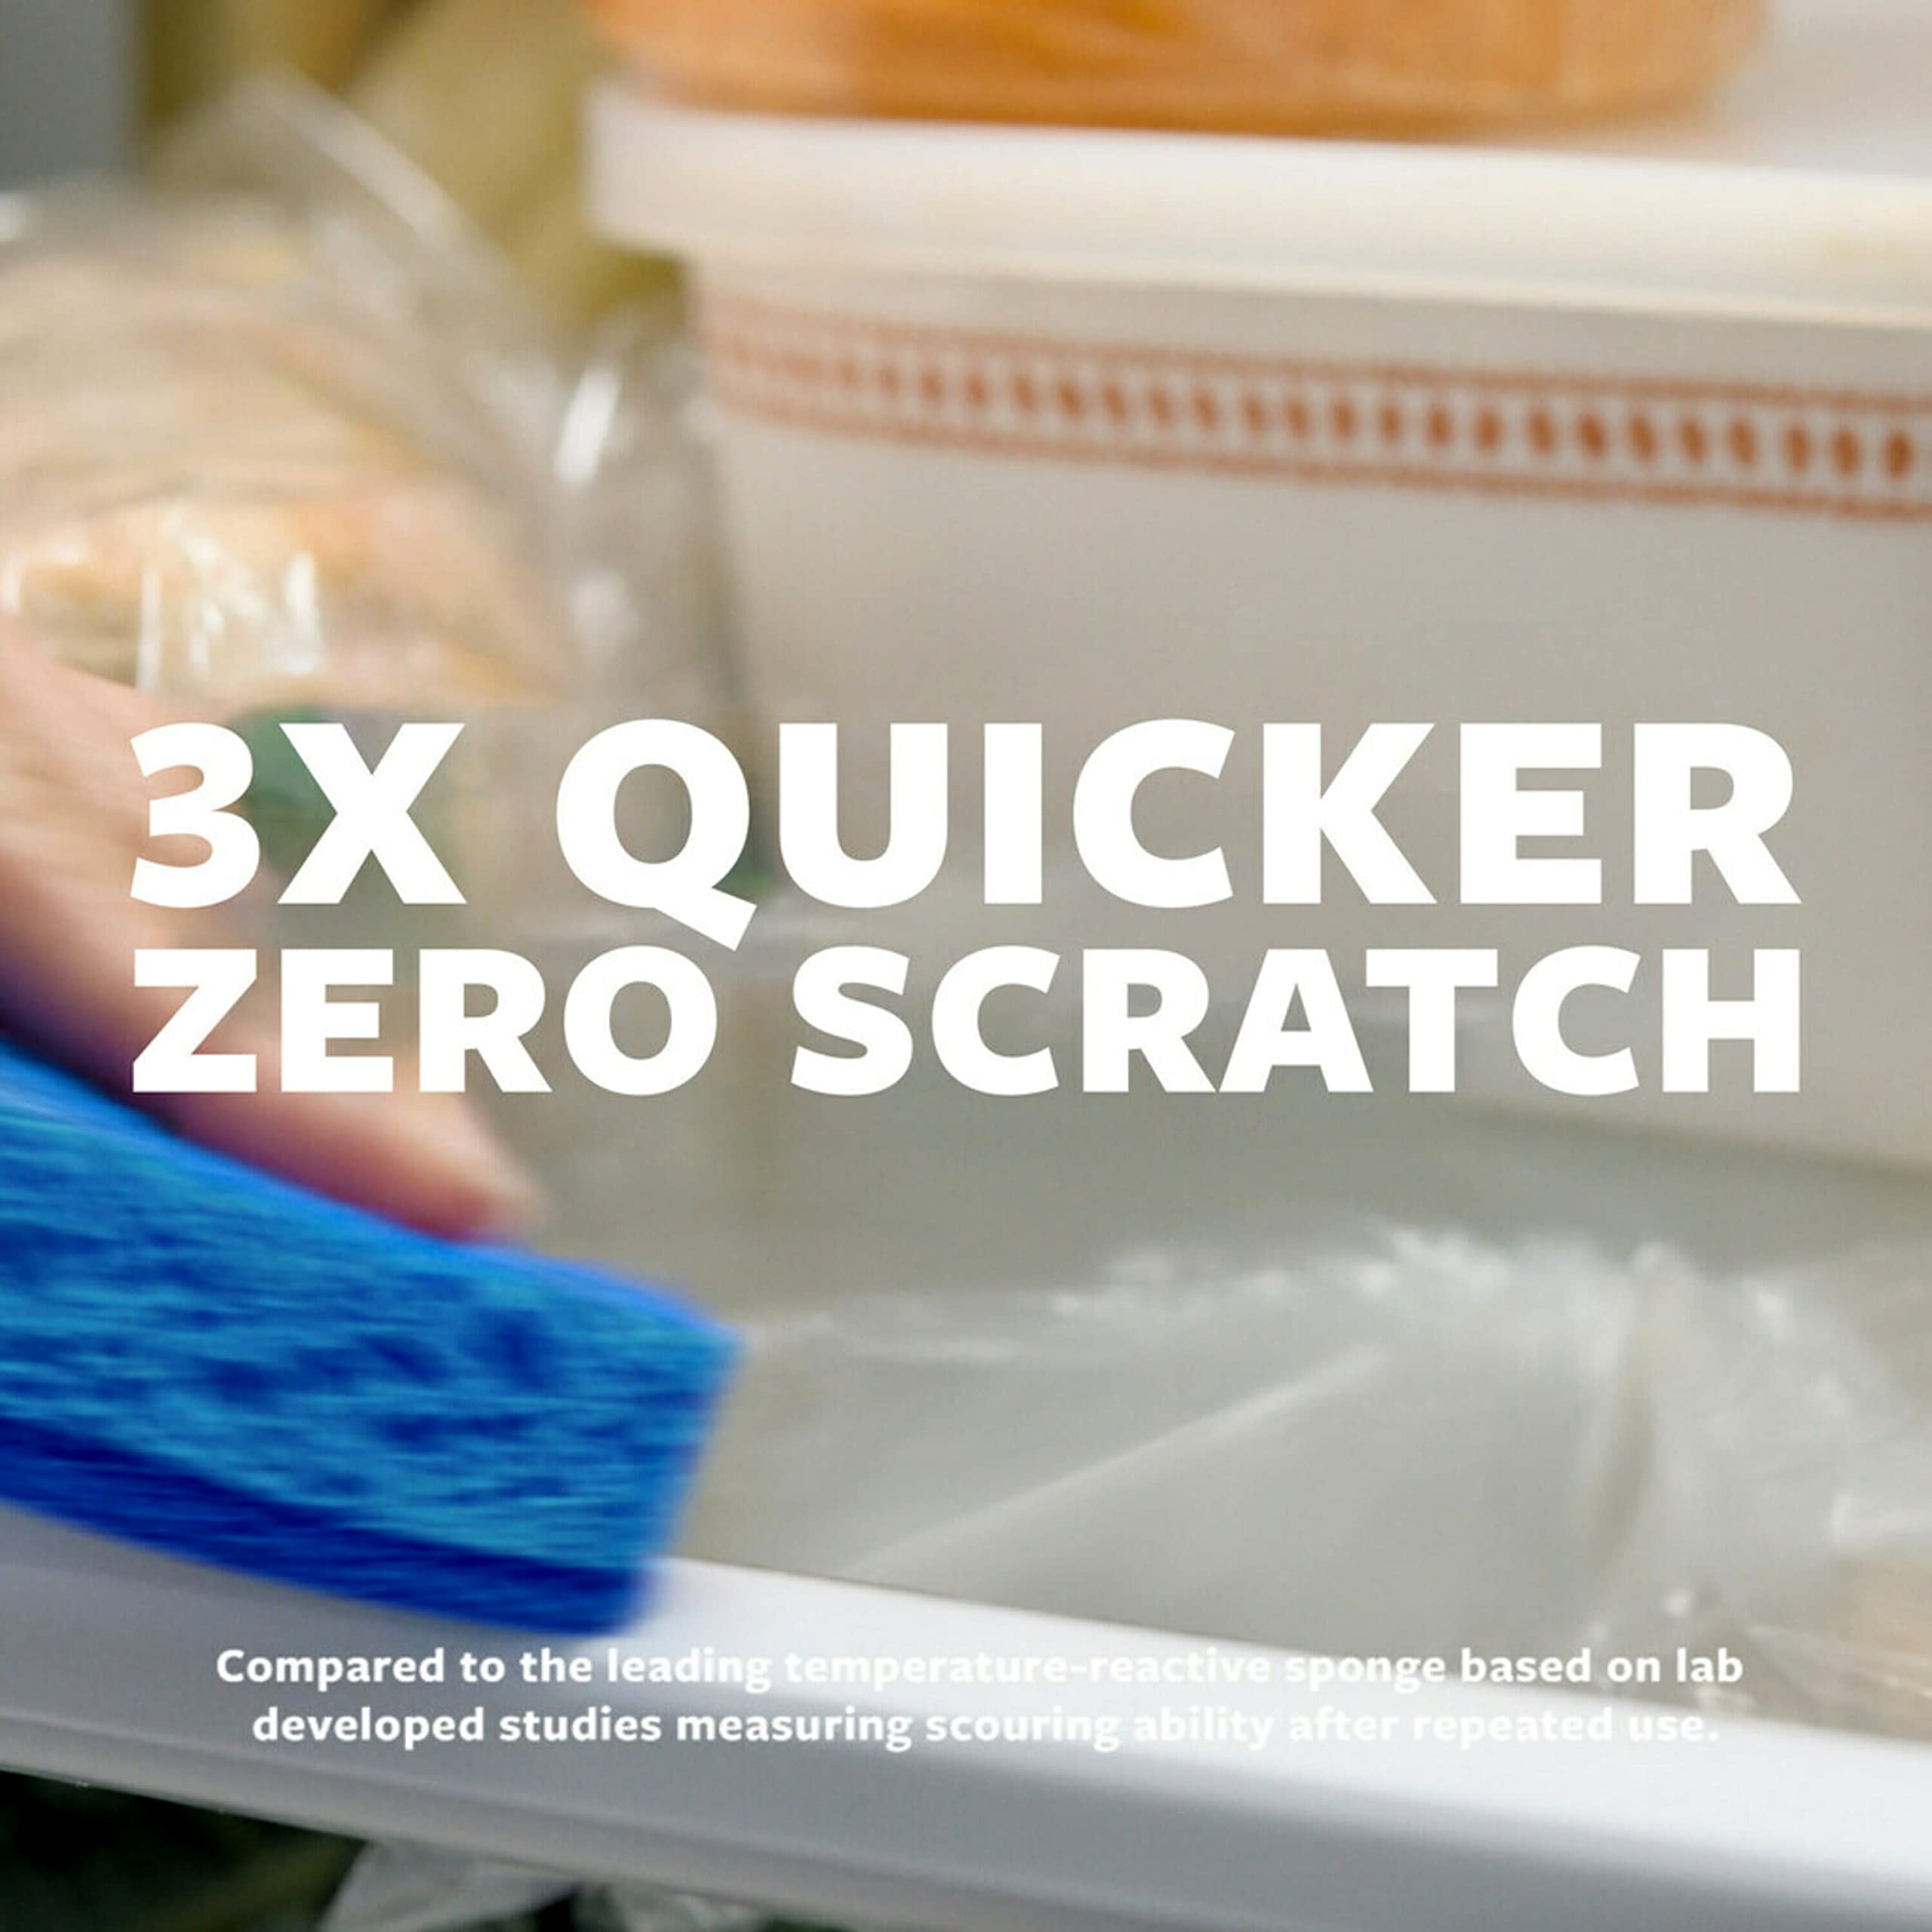 Scotch-Brite Zero Scratch Non-Scratch Scrub Sponges, Sponges for Cleaning Kitchen, Bathroom, and Household, Non-Scratch Sponges Safe for Non-Stick Cookware, 6 Scrubbing Sponges